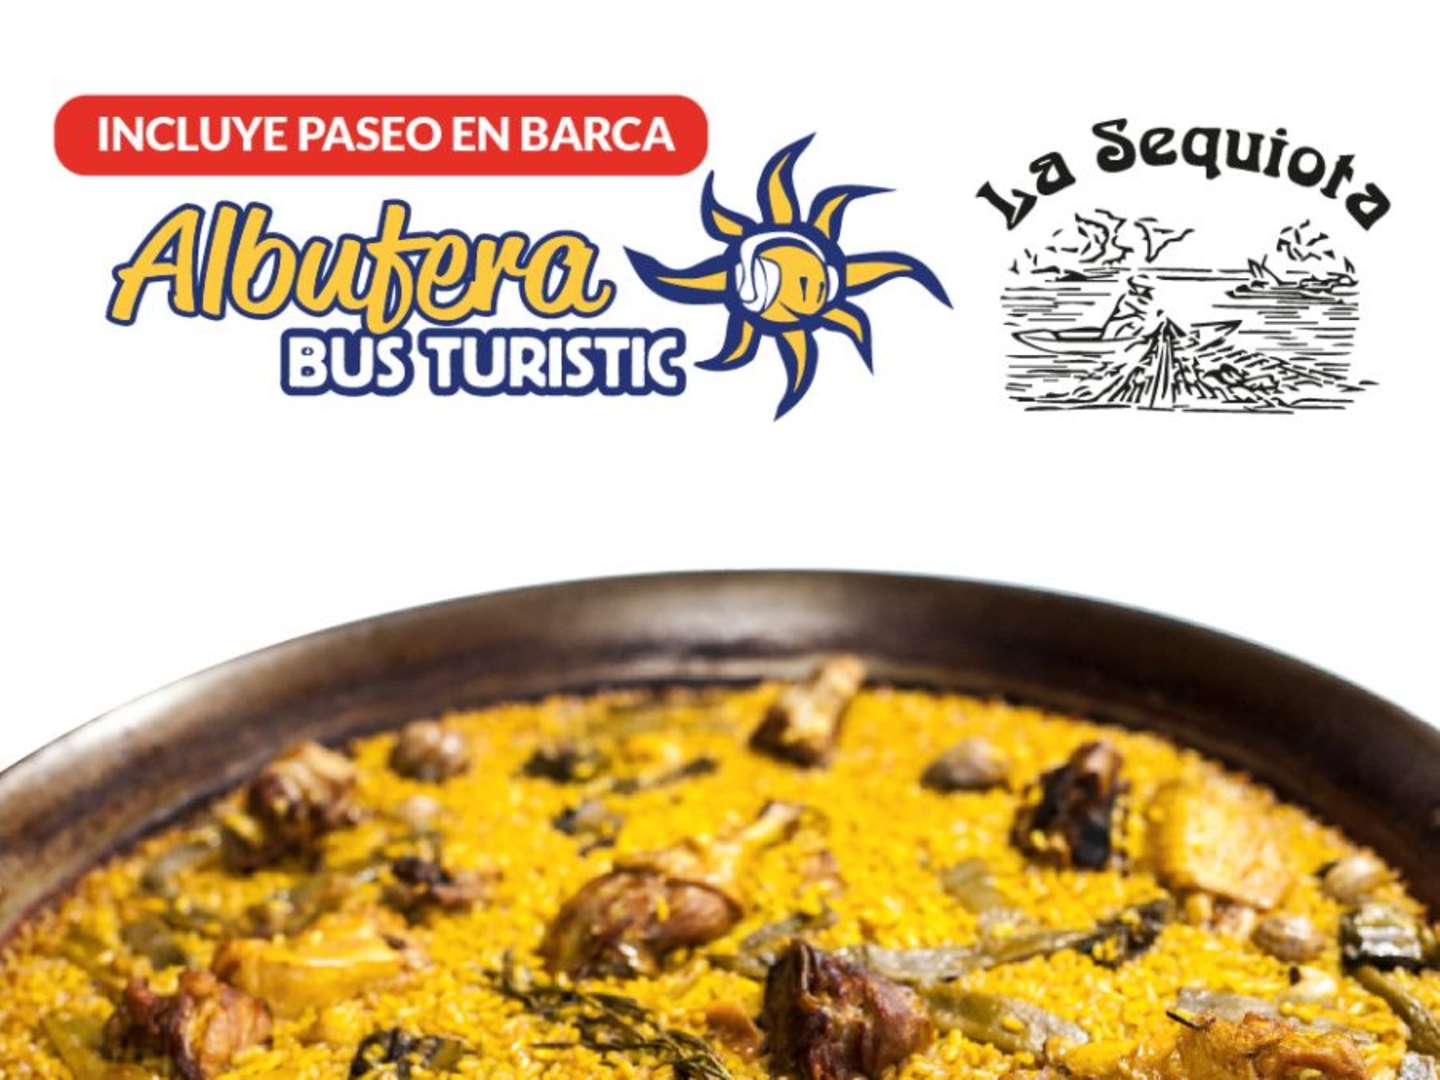 ALBUFERA BUS TURISTIC + MENÚ - Ticket Albufera + menu - from 35.00 €  